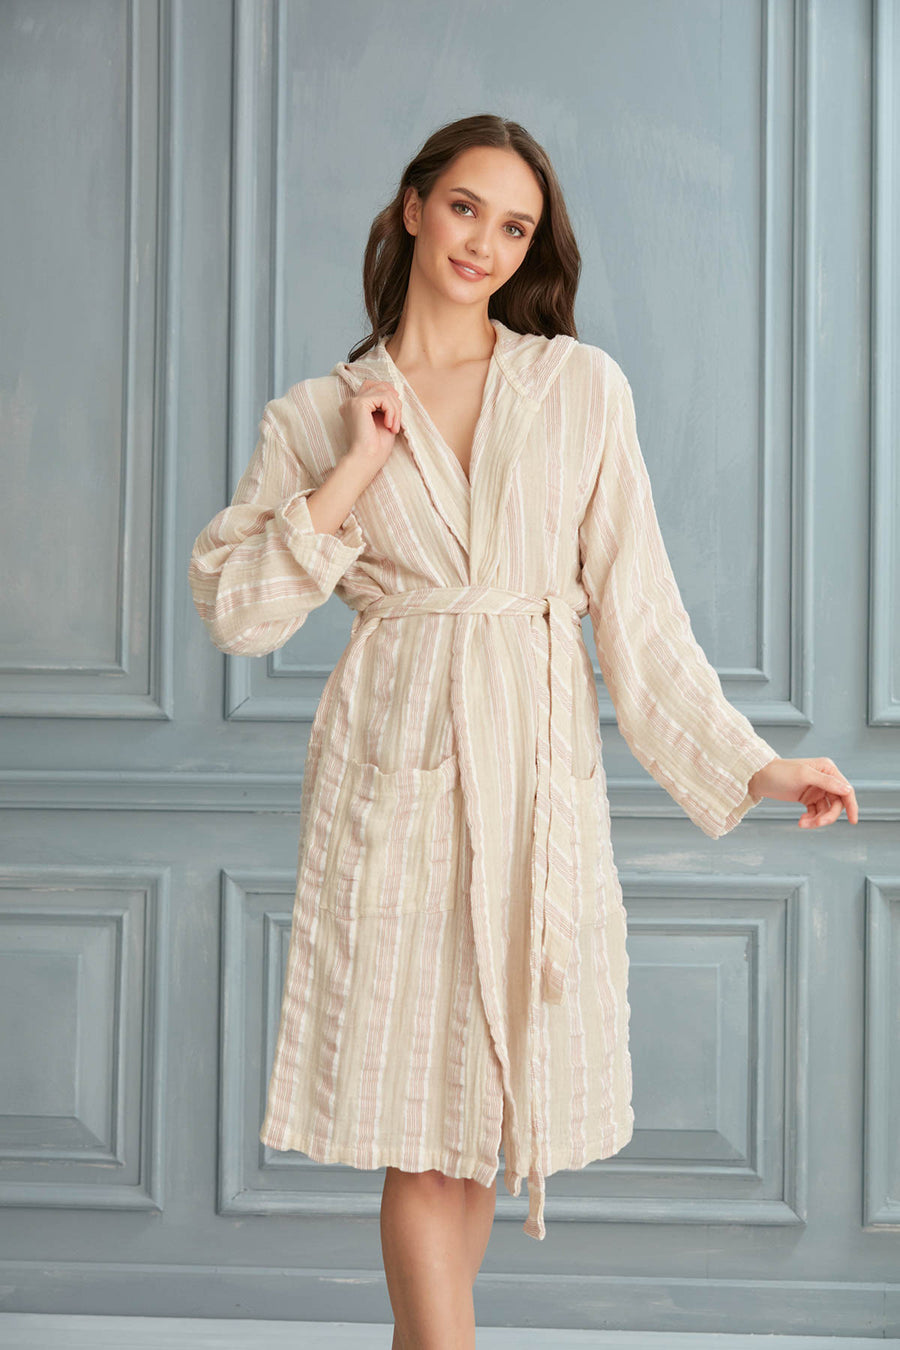 Helia Linen Cotton Gauze Hooded Robe - White Brown